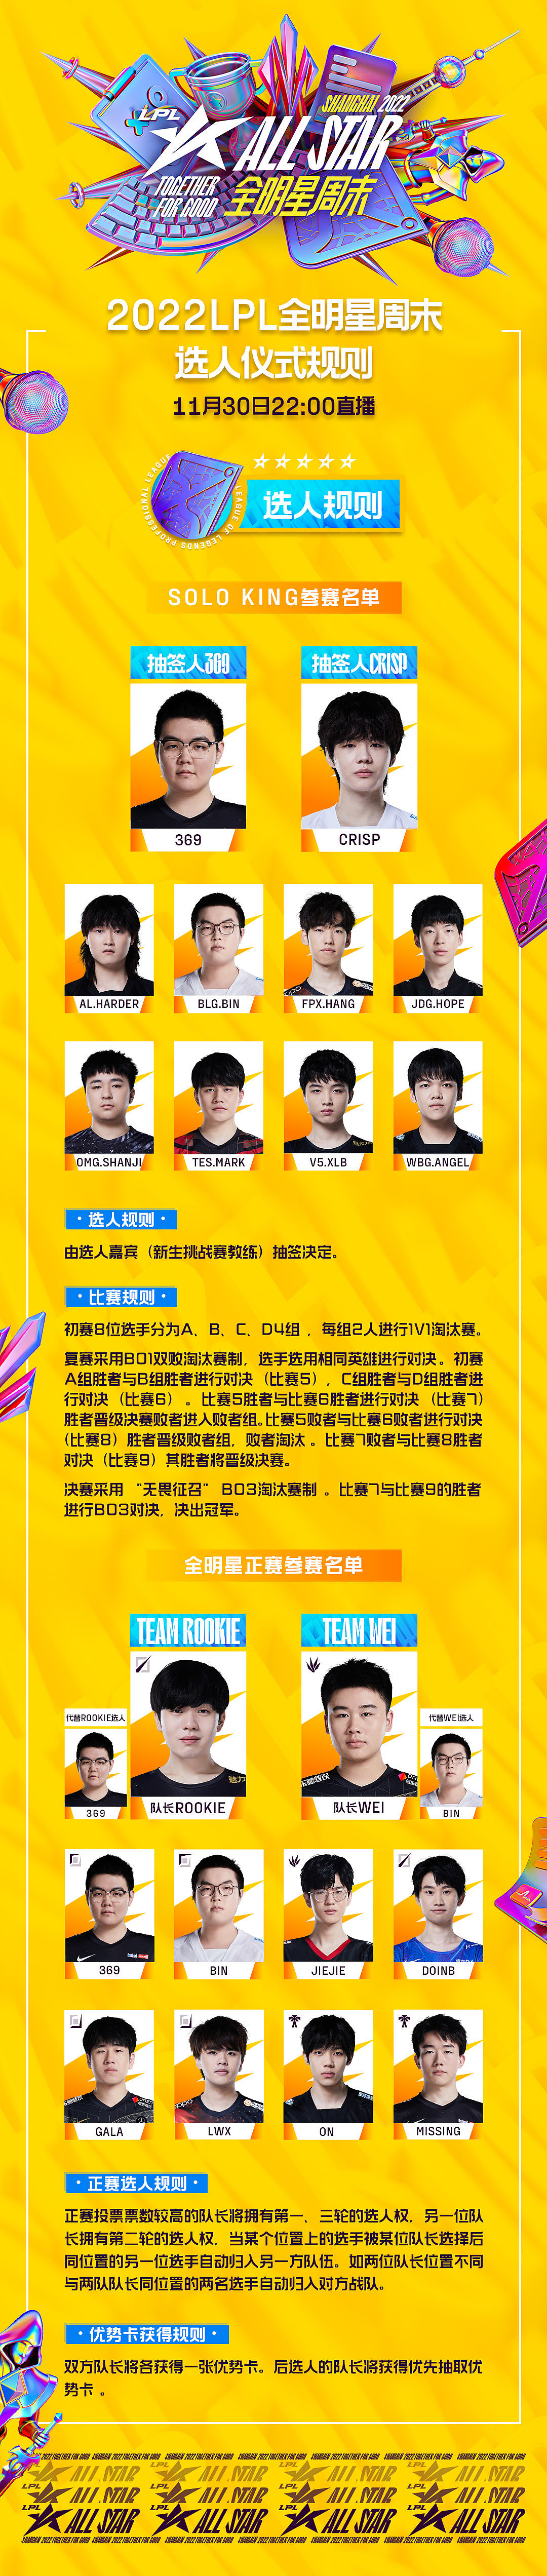 2022LPL全明星参赛阵容公布！Rookie和Wei分别作为两队队长 - 2